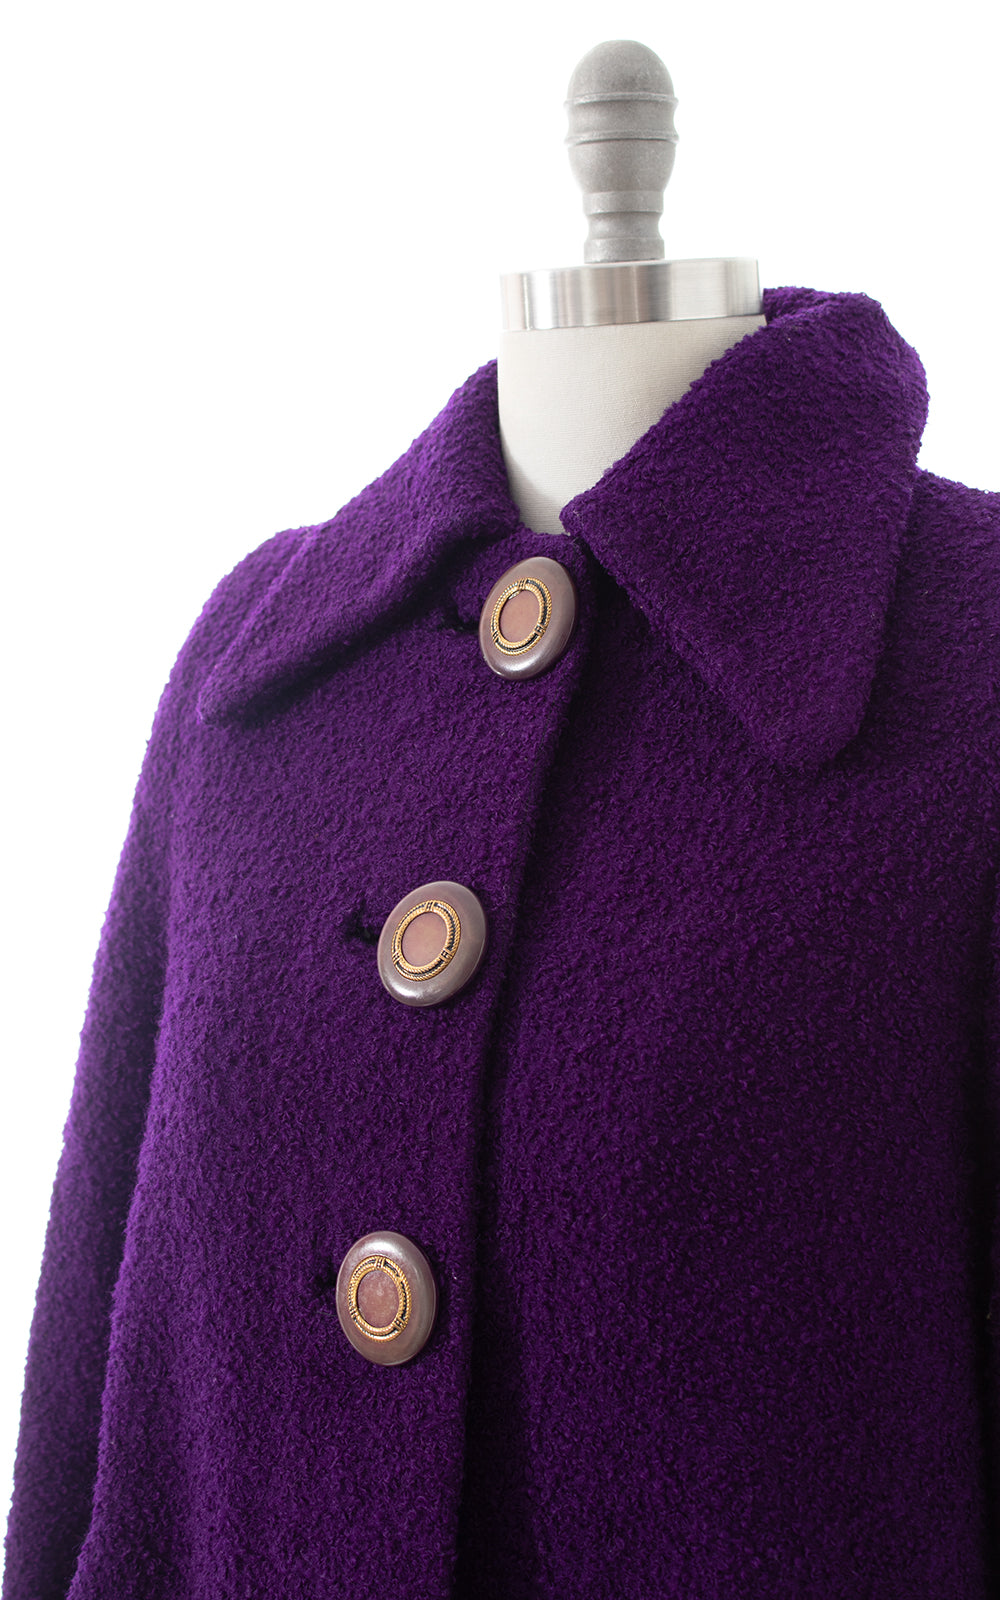 1940s Royal Purple Wool Swing Coat | medium/large